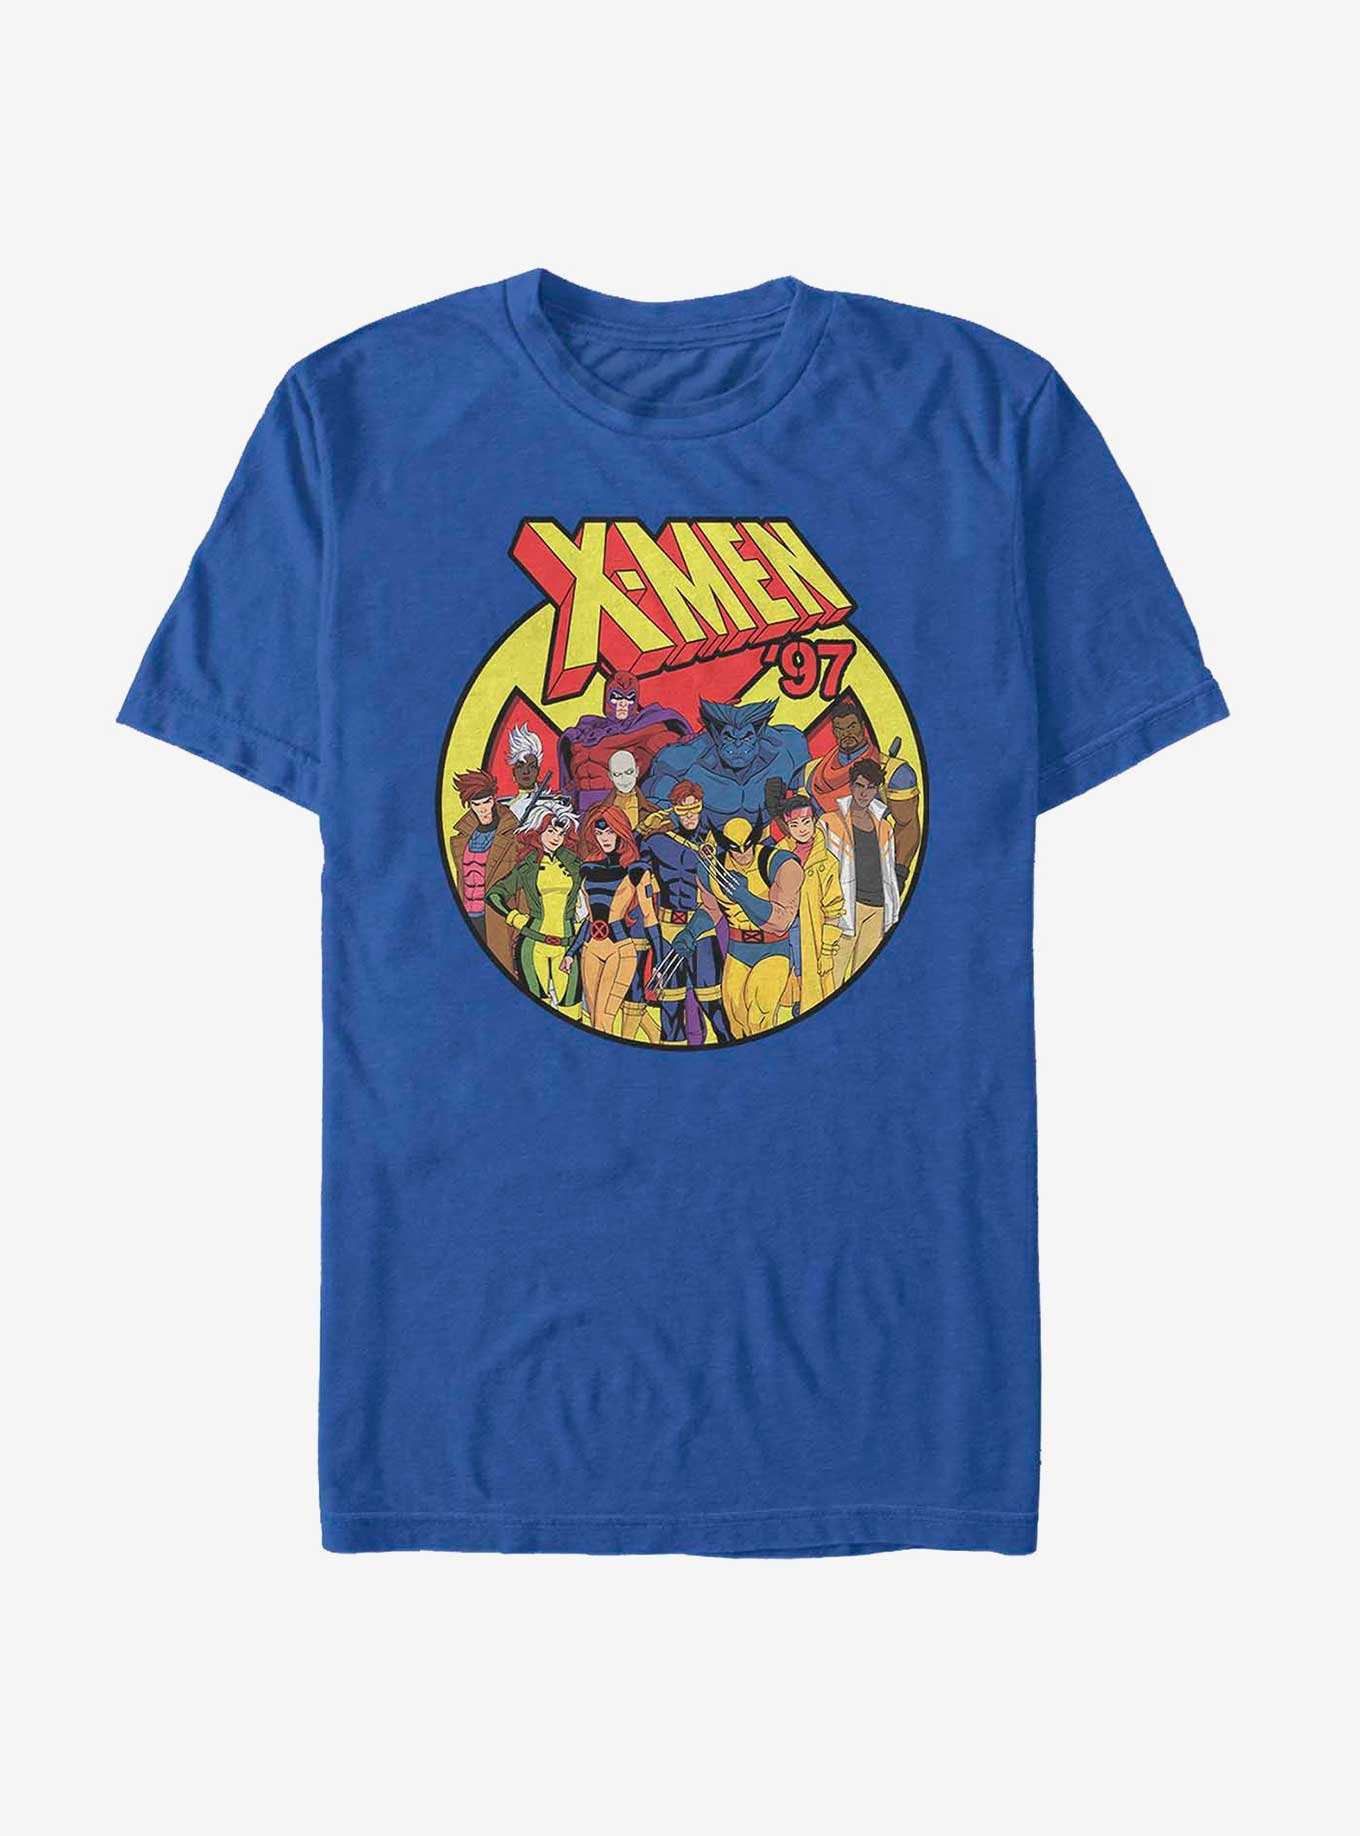 OFFICIAL X-Men Merchandise & Shirts | Hot Topic